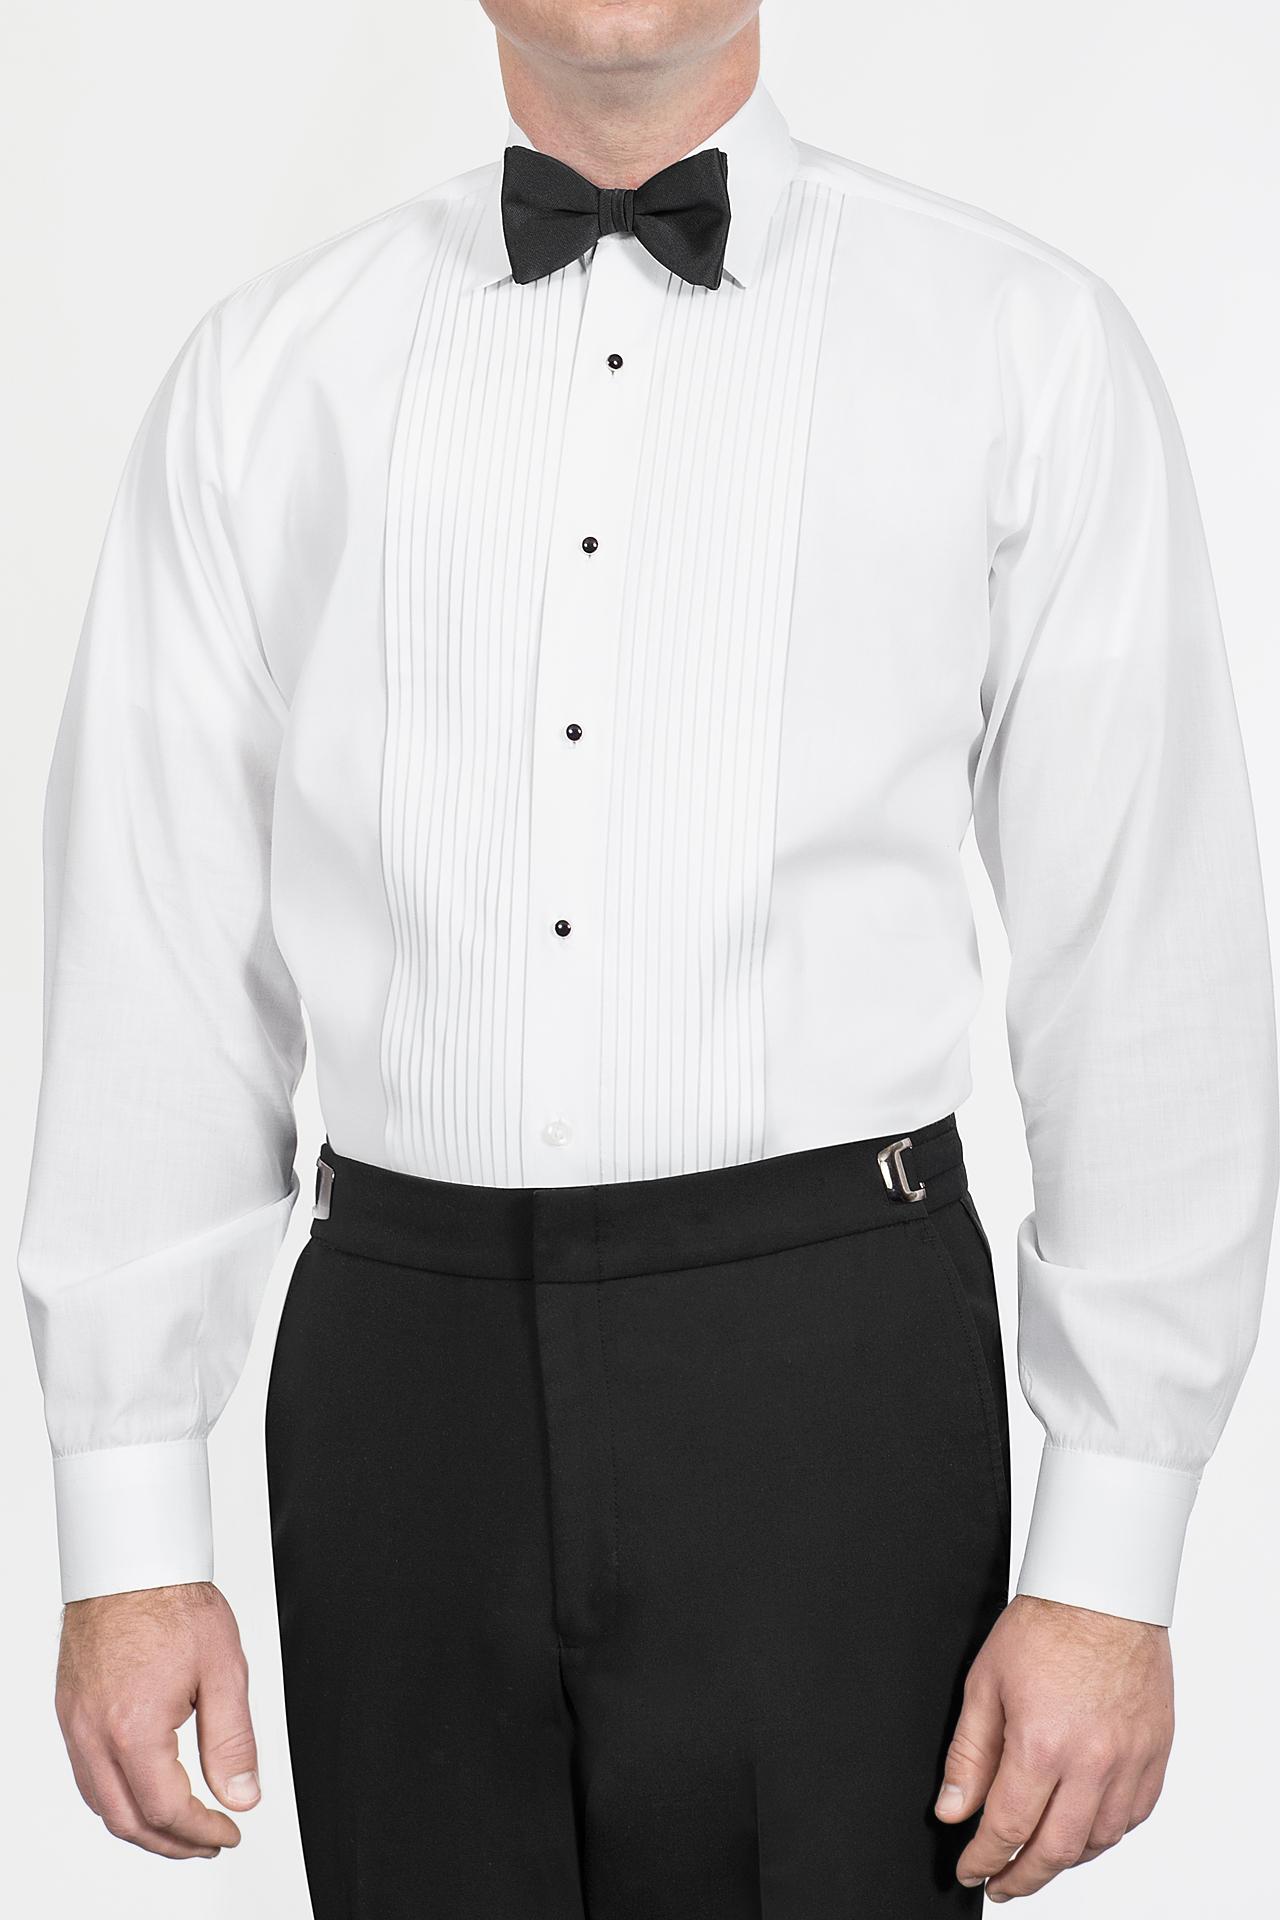 White Laydown Collar - T.N. Boone TuxedosT.N. Boone Tuxedos